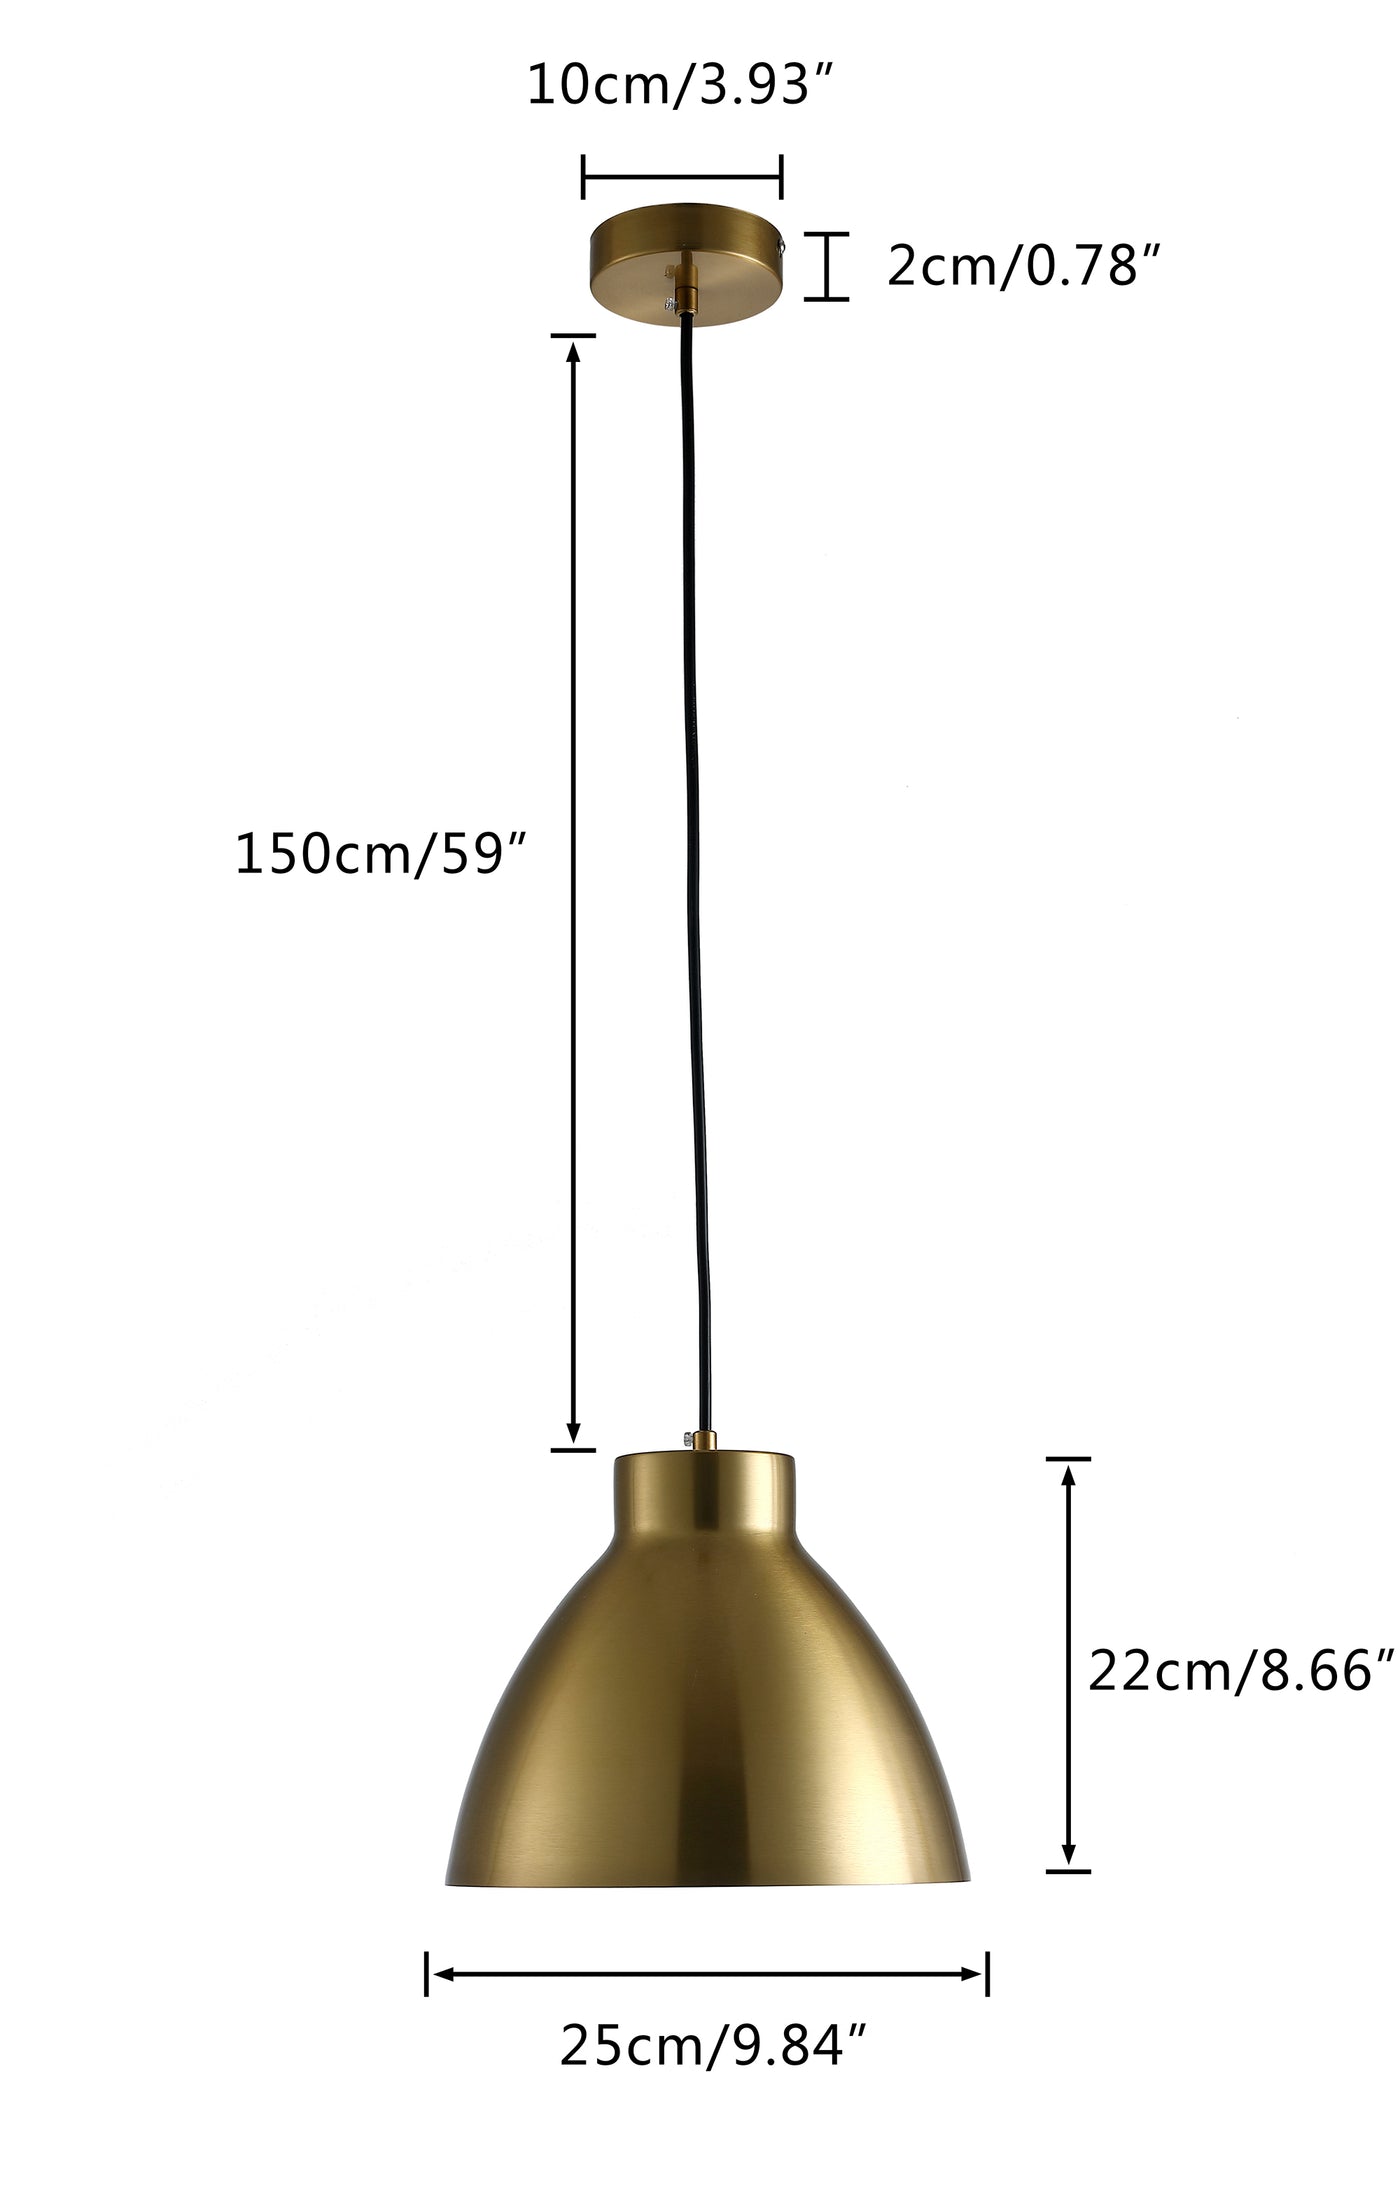 1-Light Single Gold Dome Pendant Lighting